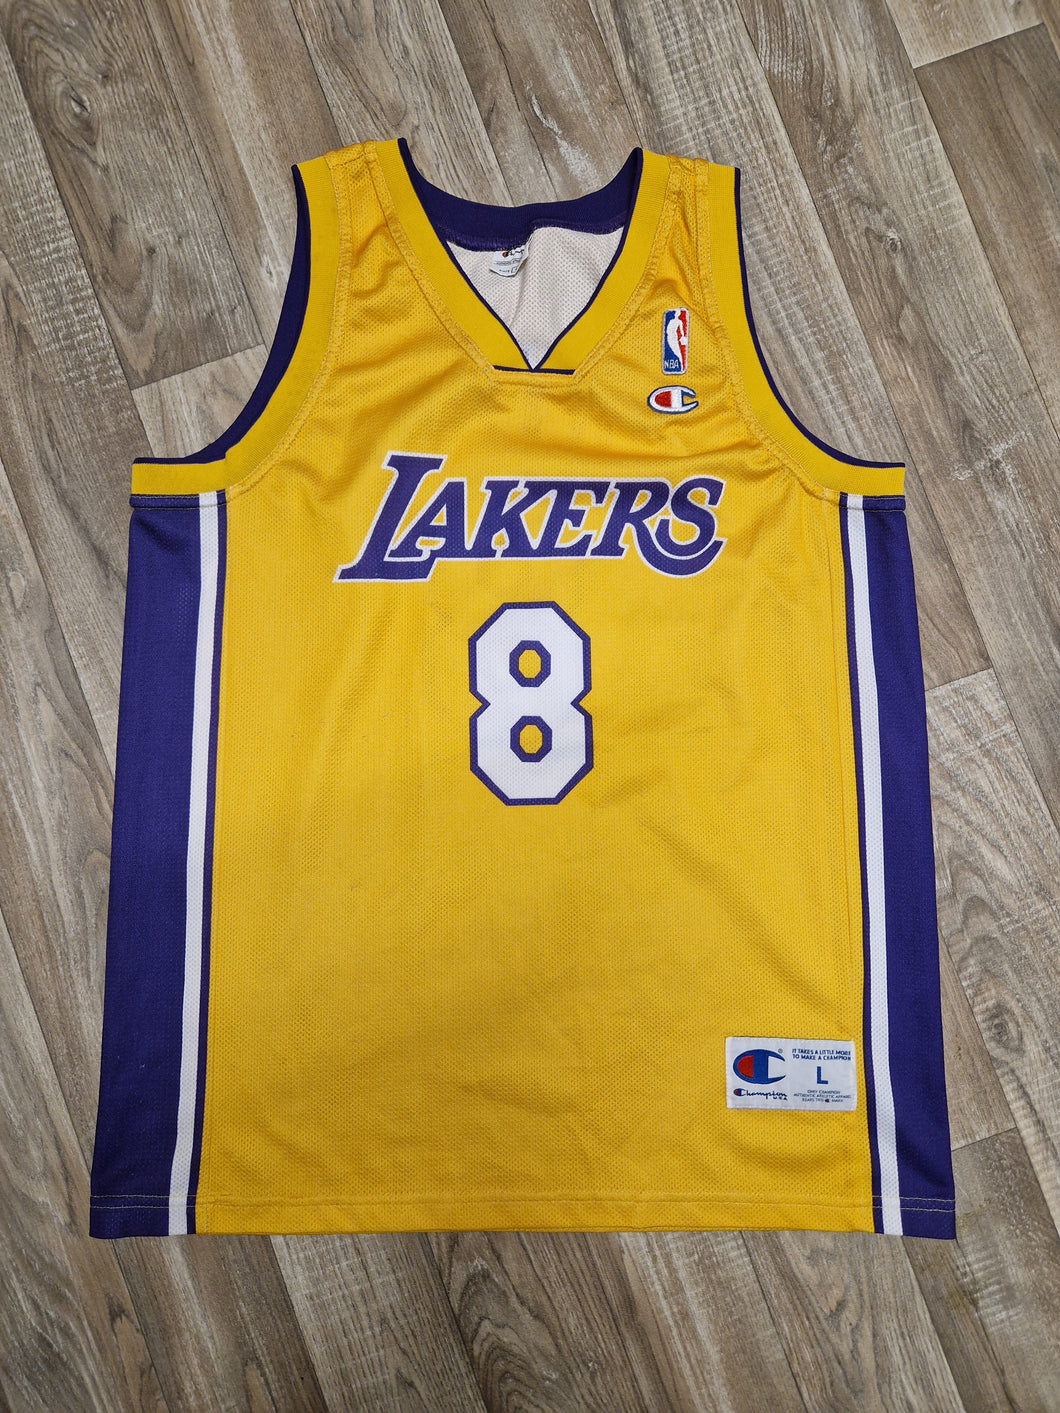 Kobe Bryany Los Angeles Lakers Jersey Size Large